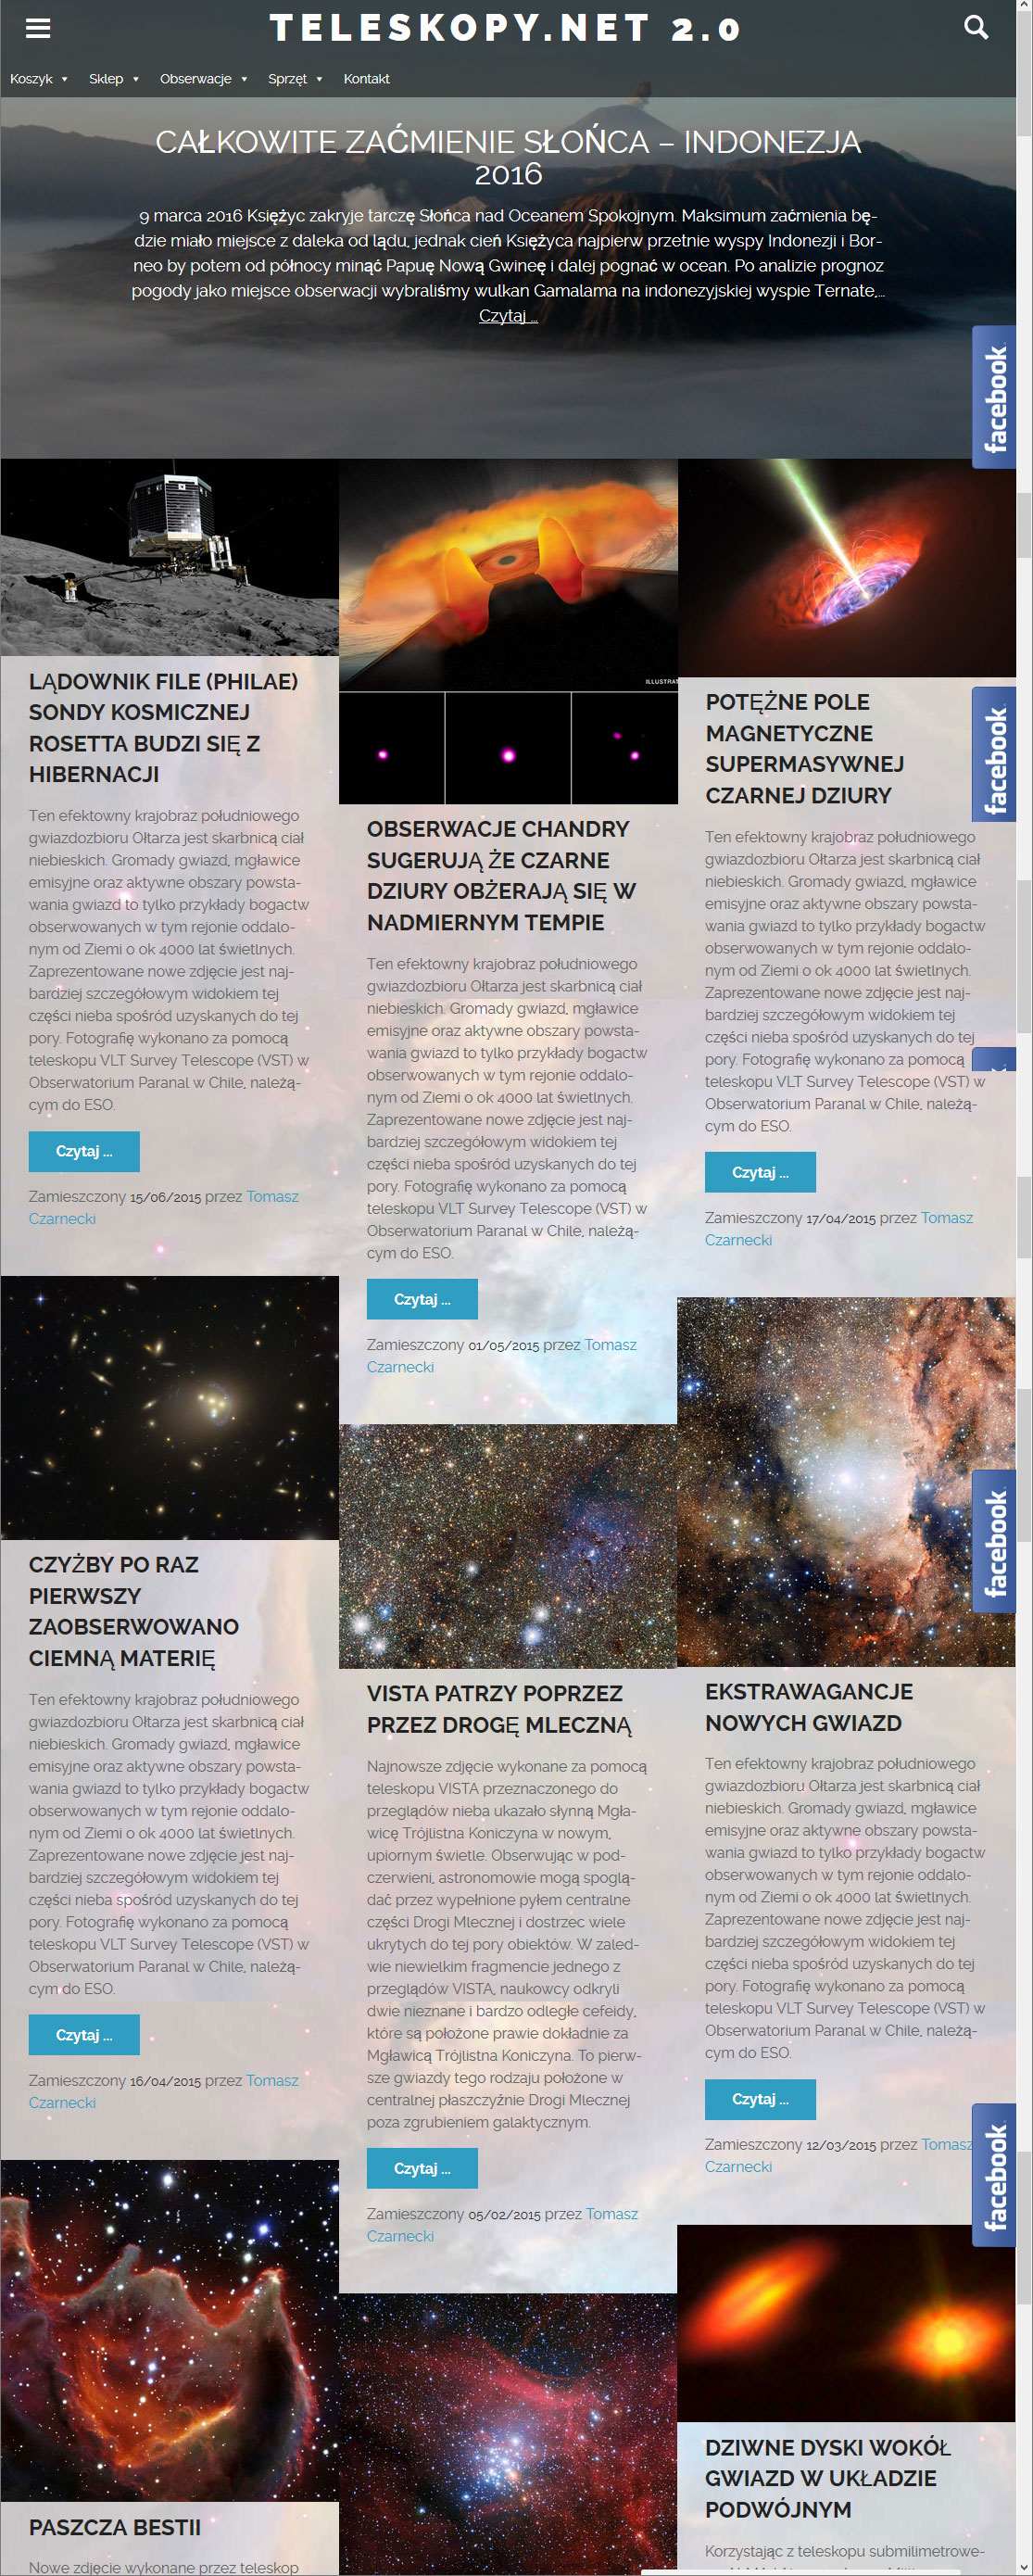 teleskopy.net v2.0